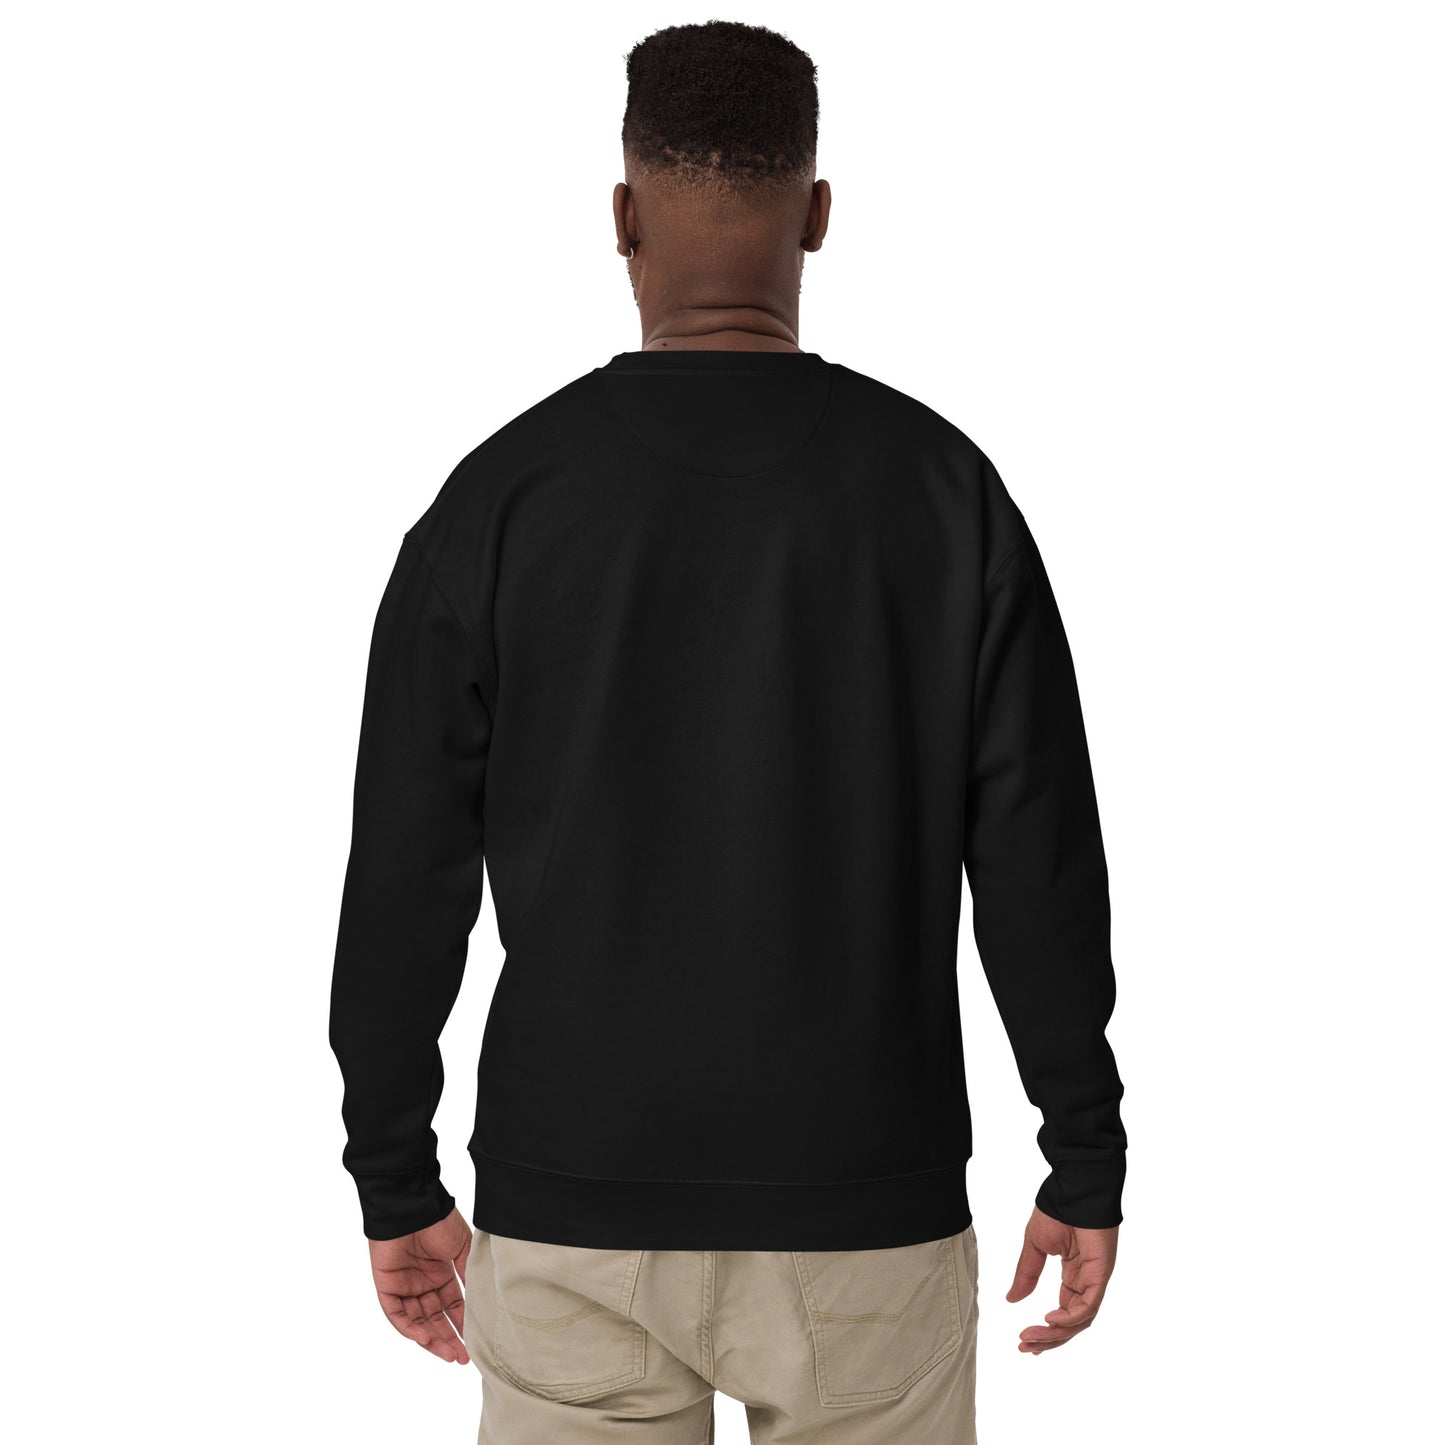 Boxed Smile Fleece in Black - Sweatshirt